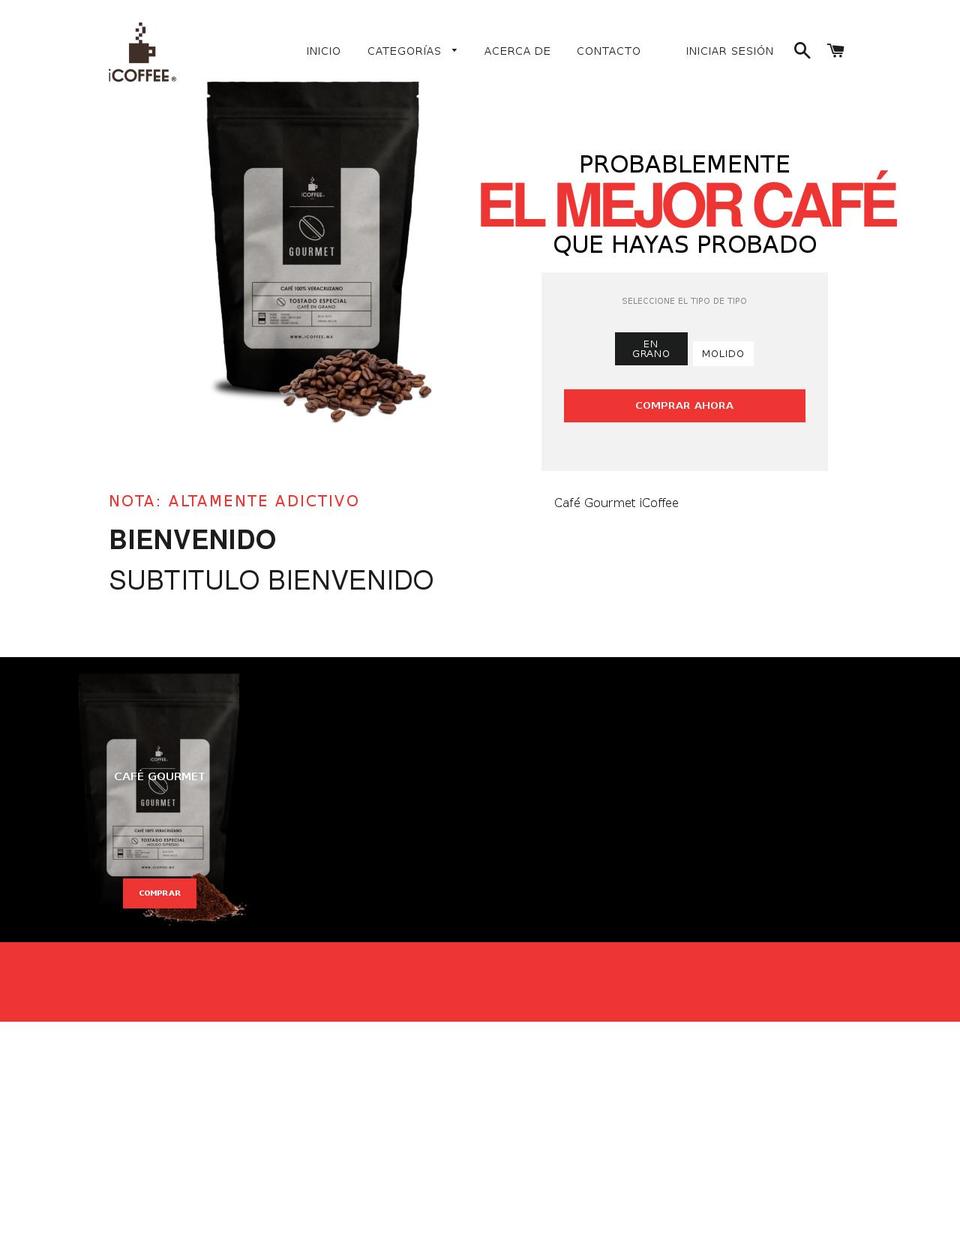 icoffee.mx shopify website screenshot